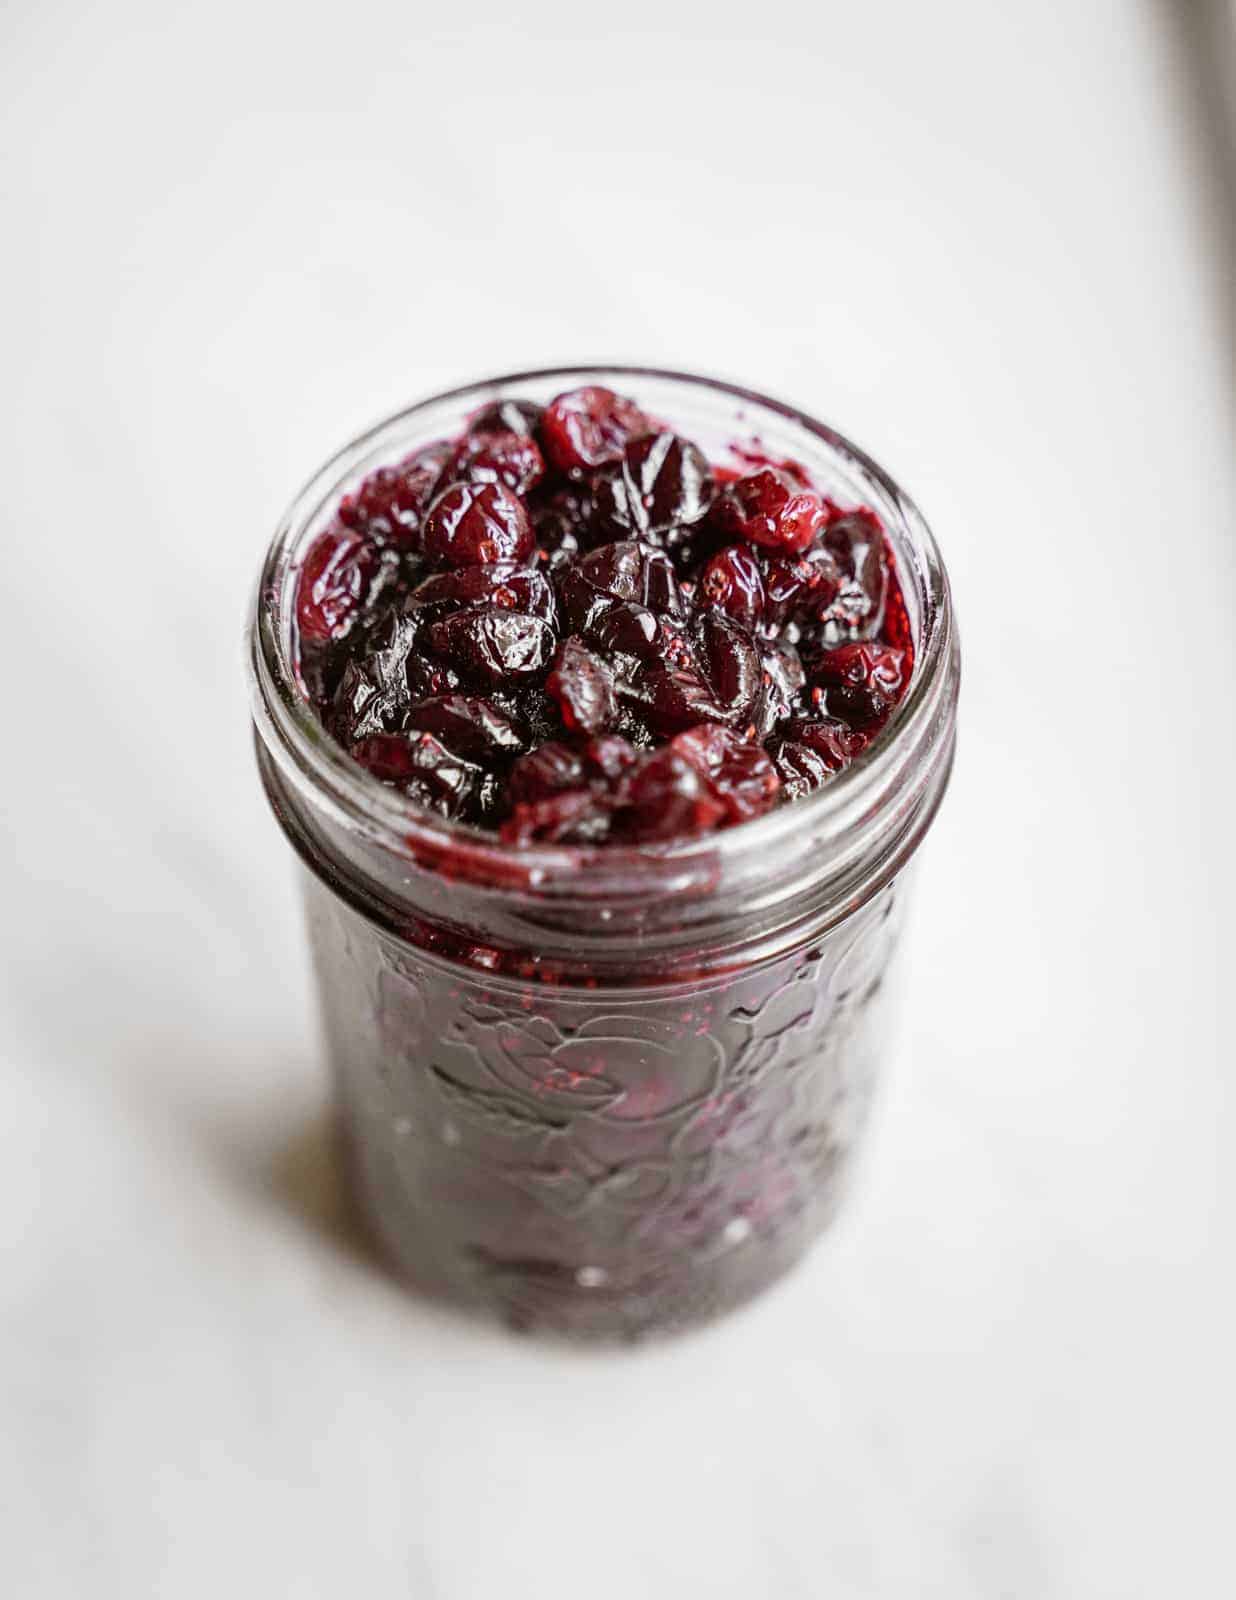 Jar of vegan cranberry sauce made from scratch.